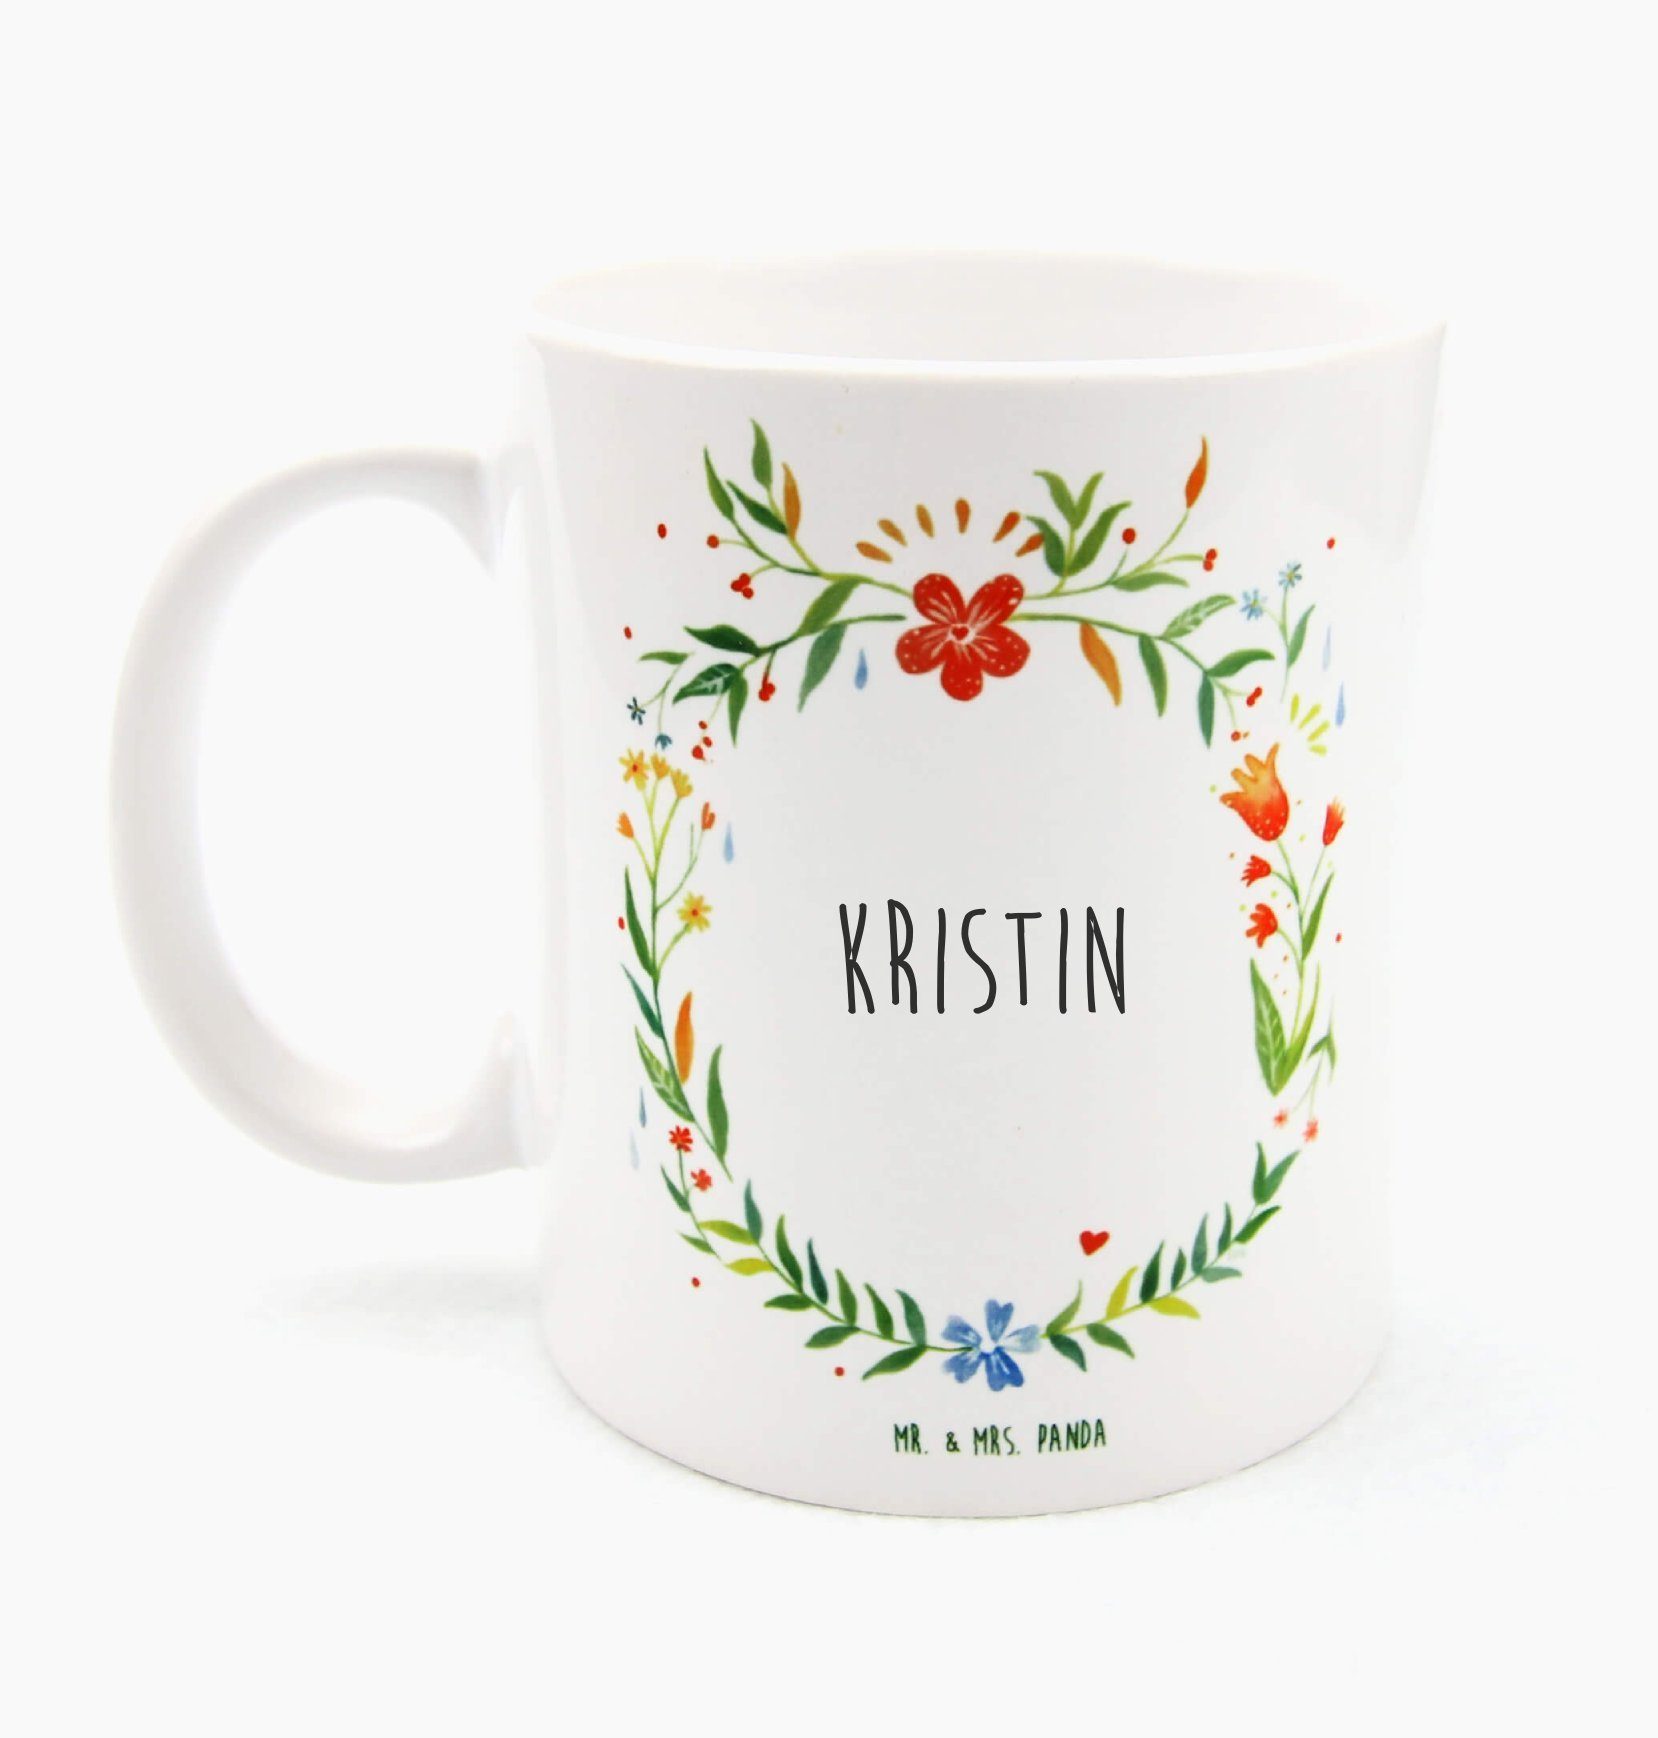 Mr. & Mrs. Kristin - Tasse, Tasse Ker, Tasse, Geschenk Kaffeetasse, Panda Keramik Teetasse, Geschenk